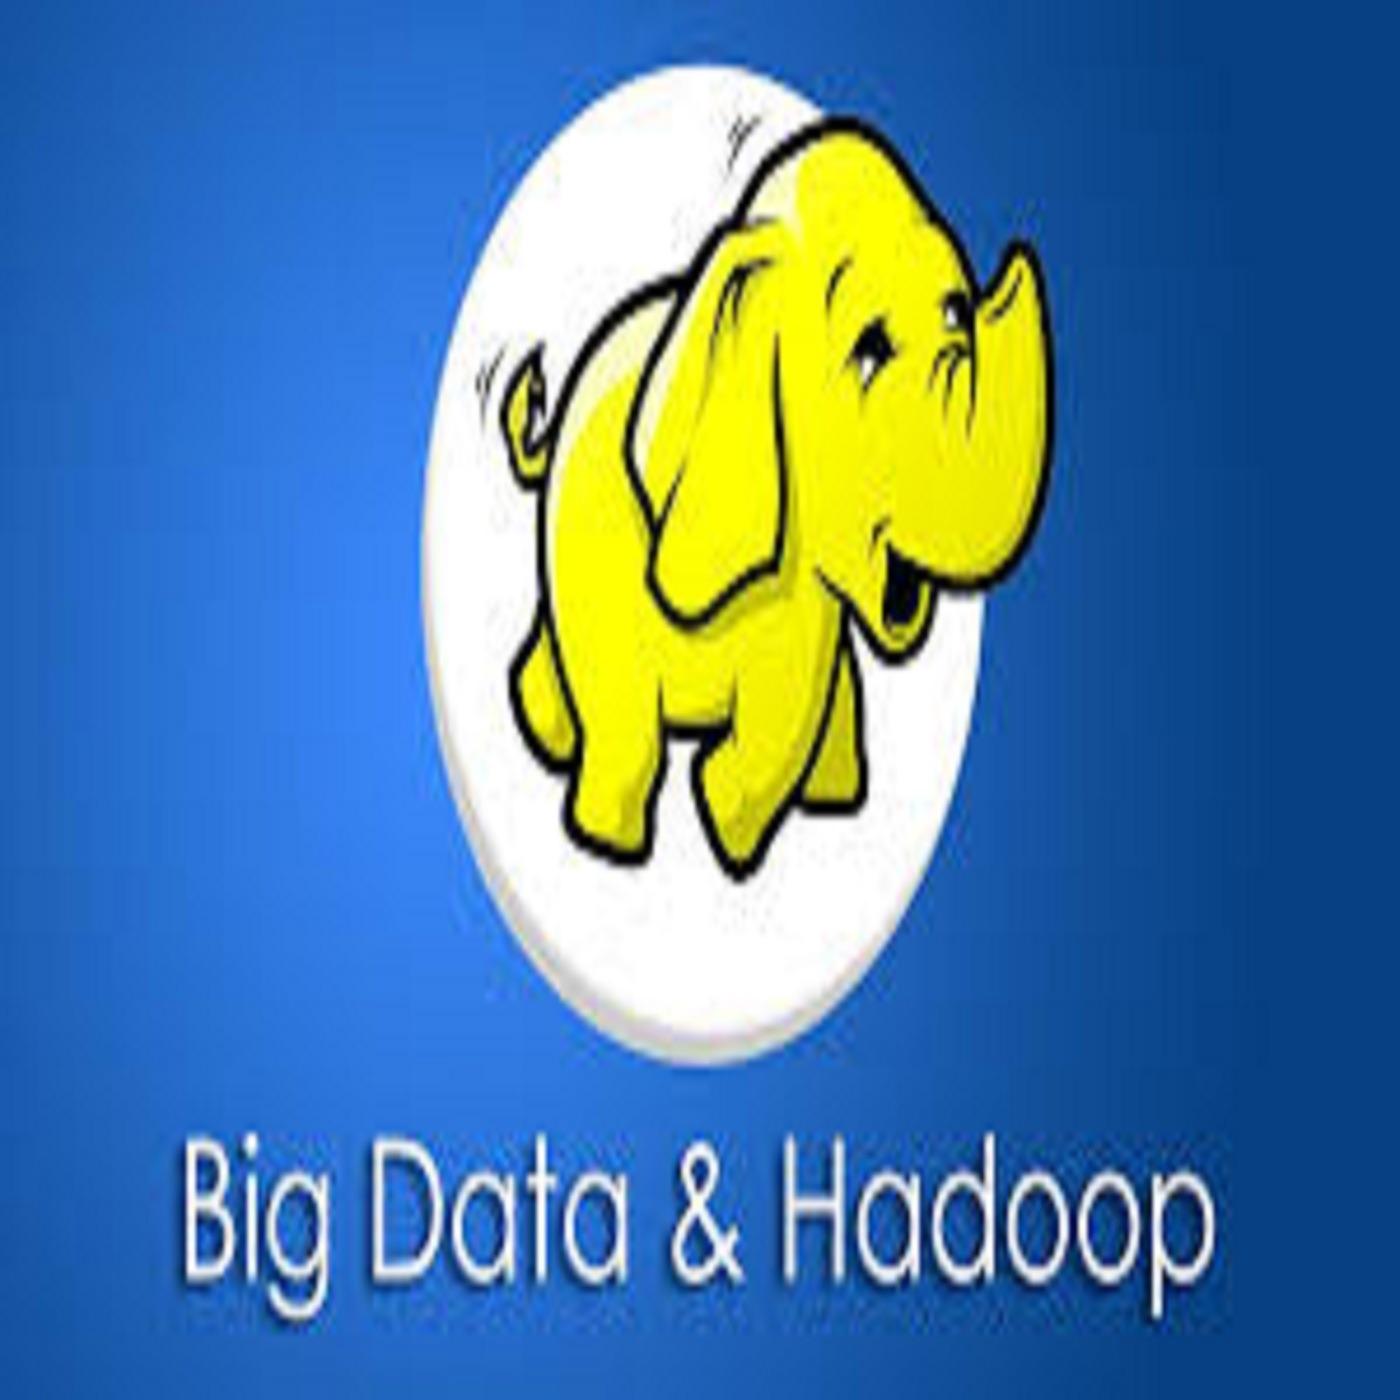 Tutorial on Hadoop Big Data Course